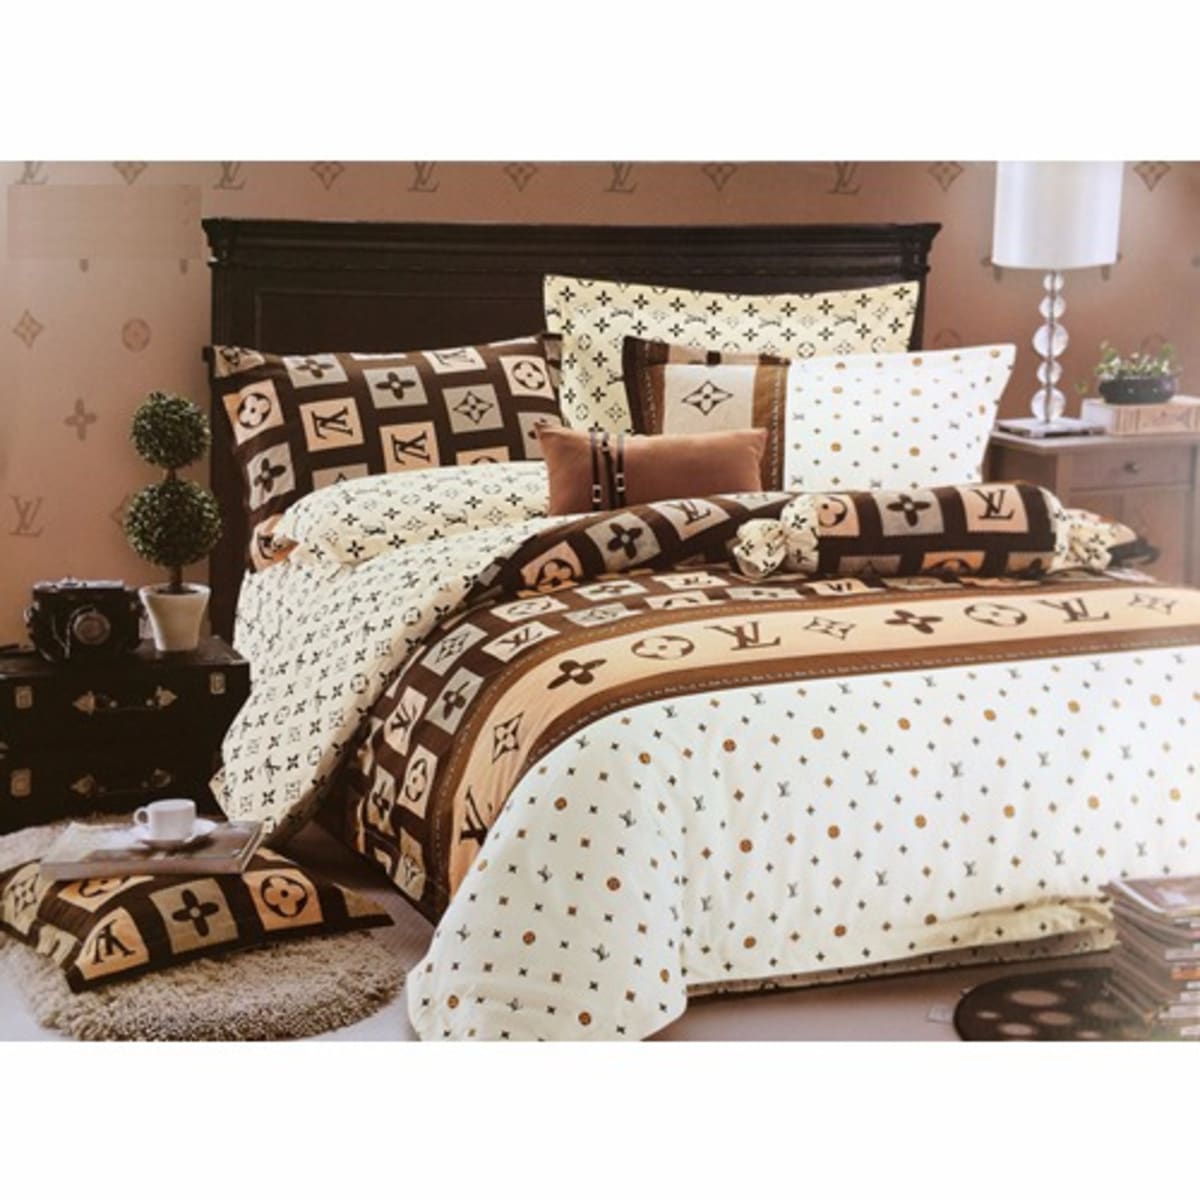 SALE] Louis Vuitton Black Gold Luxury Brand High-End Bedding Set LV Home  Decor